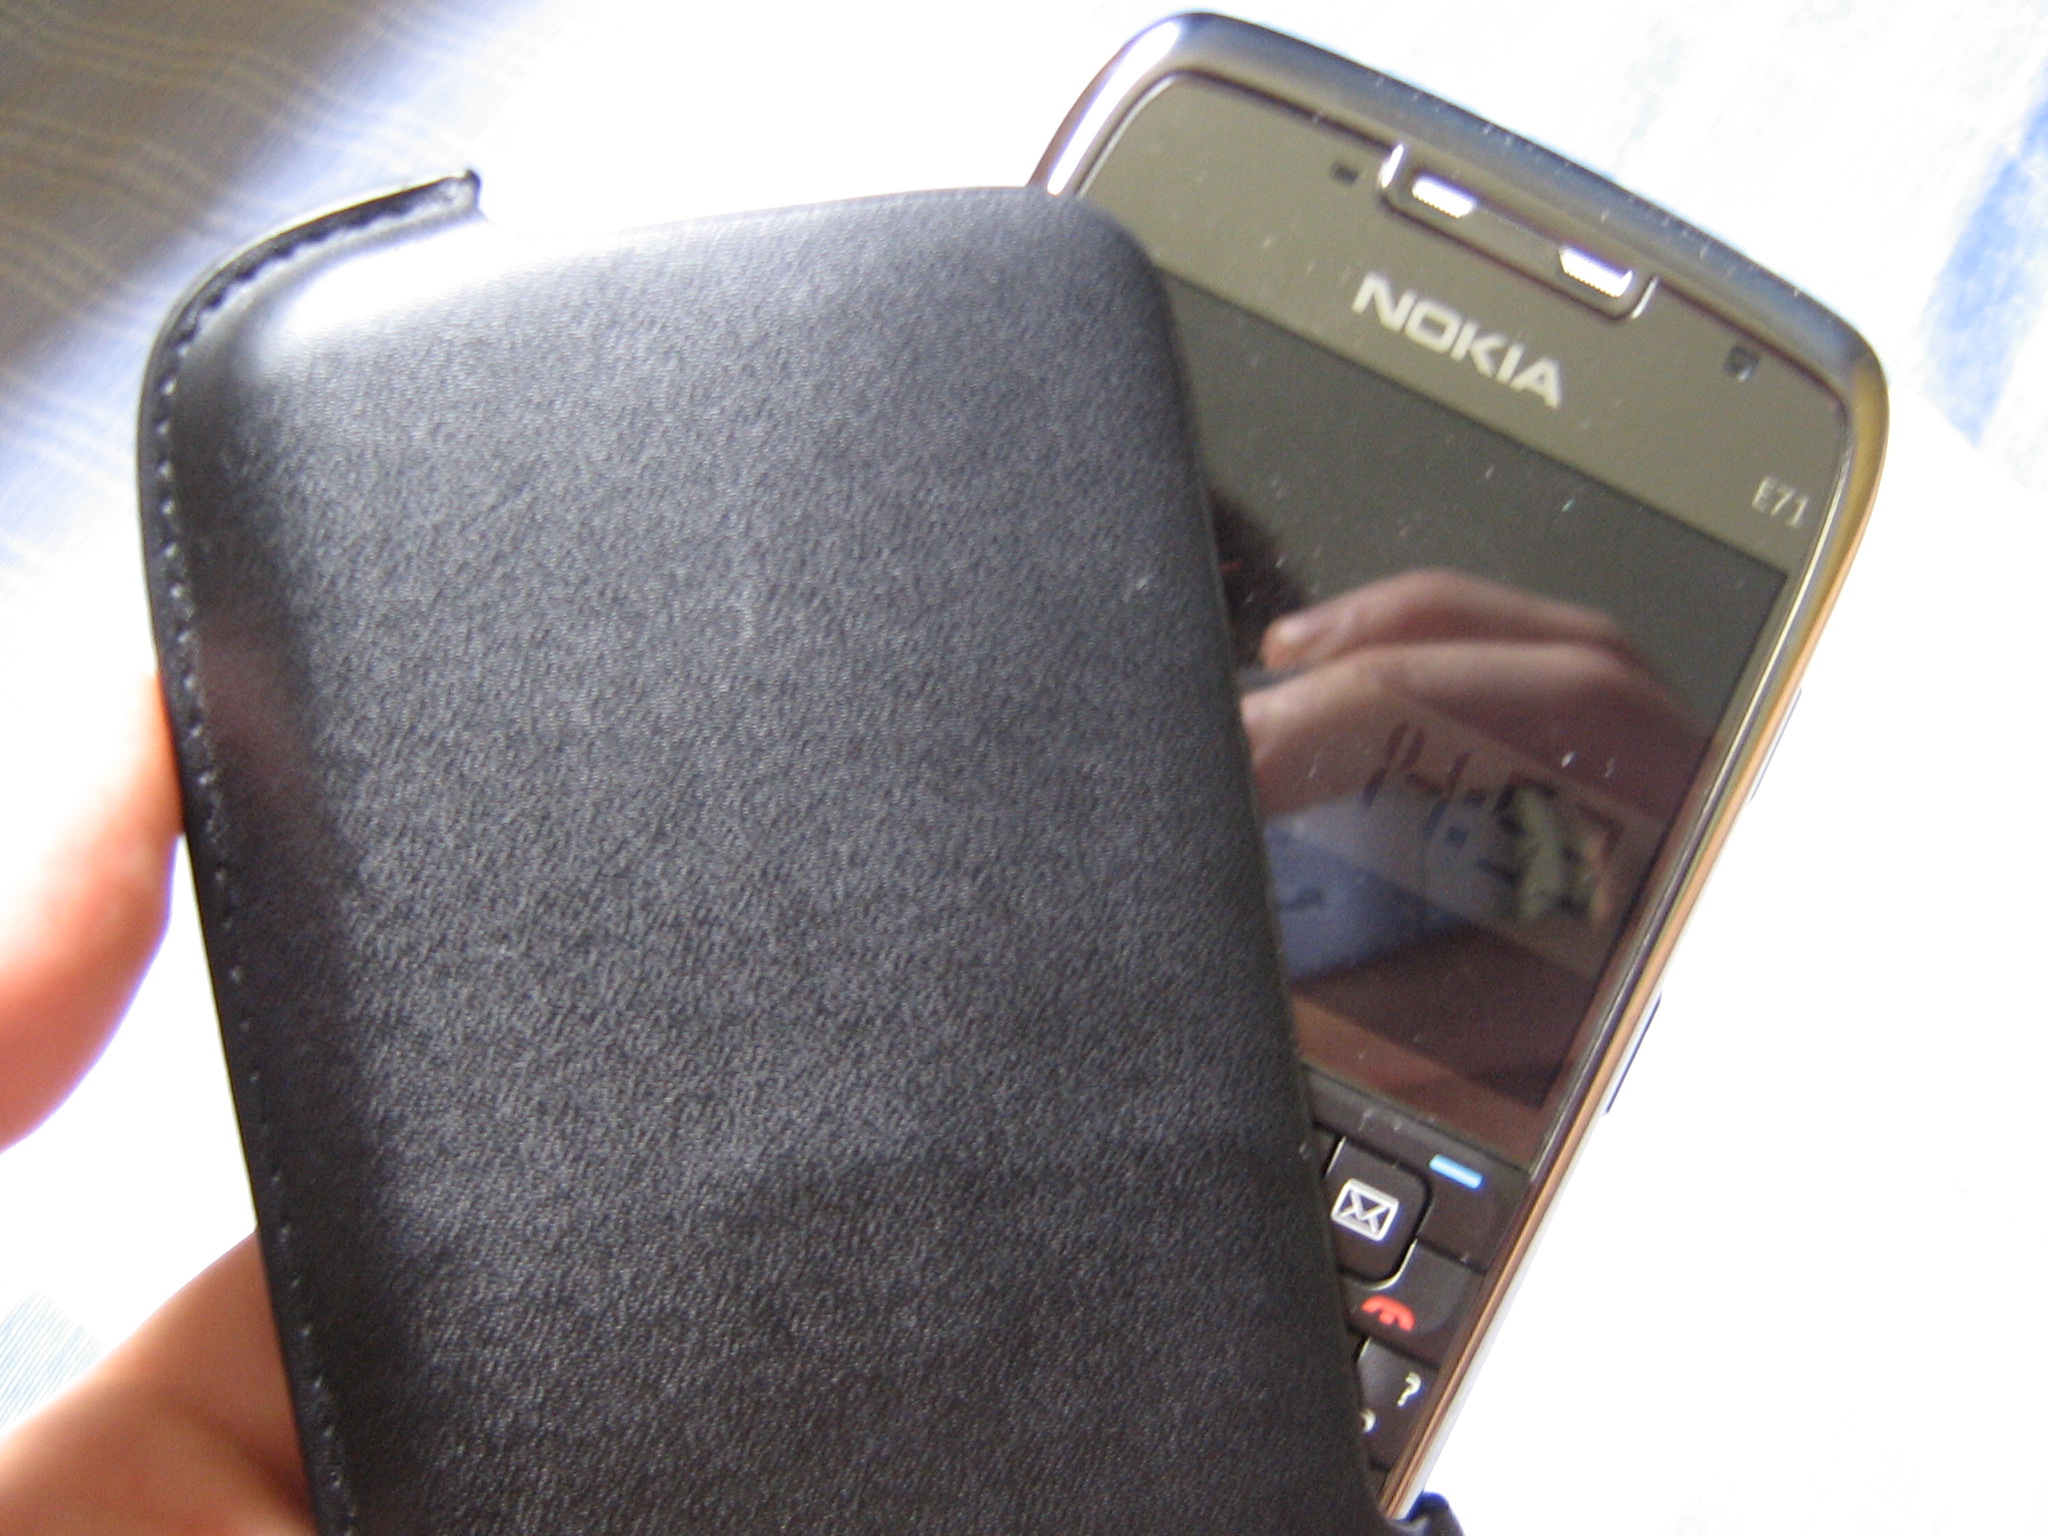 capa preta Nokia E71